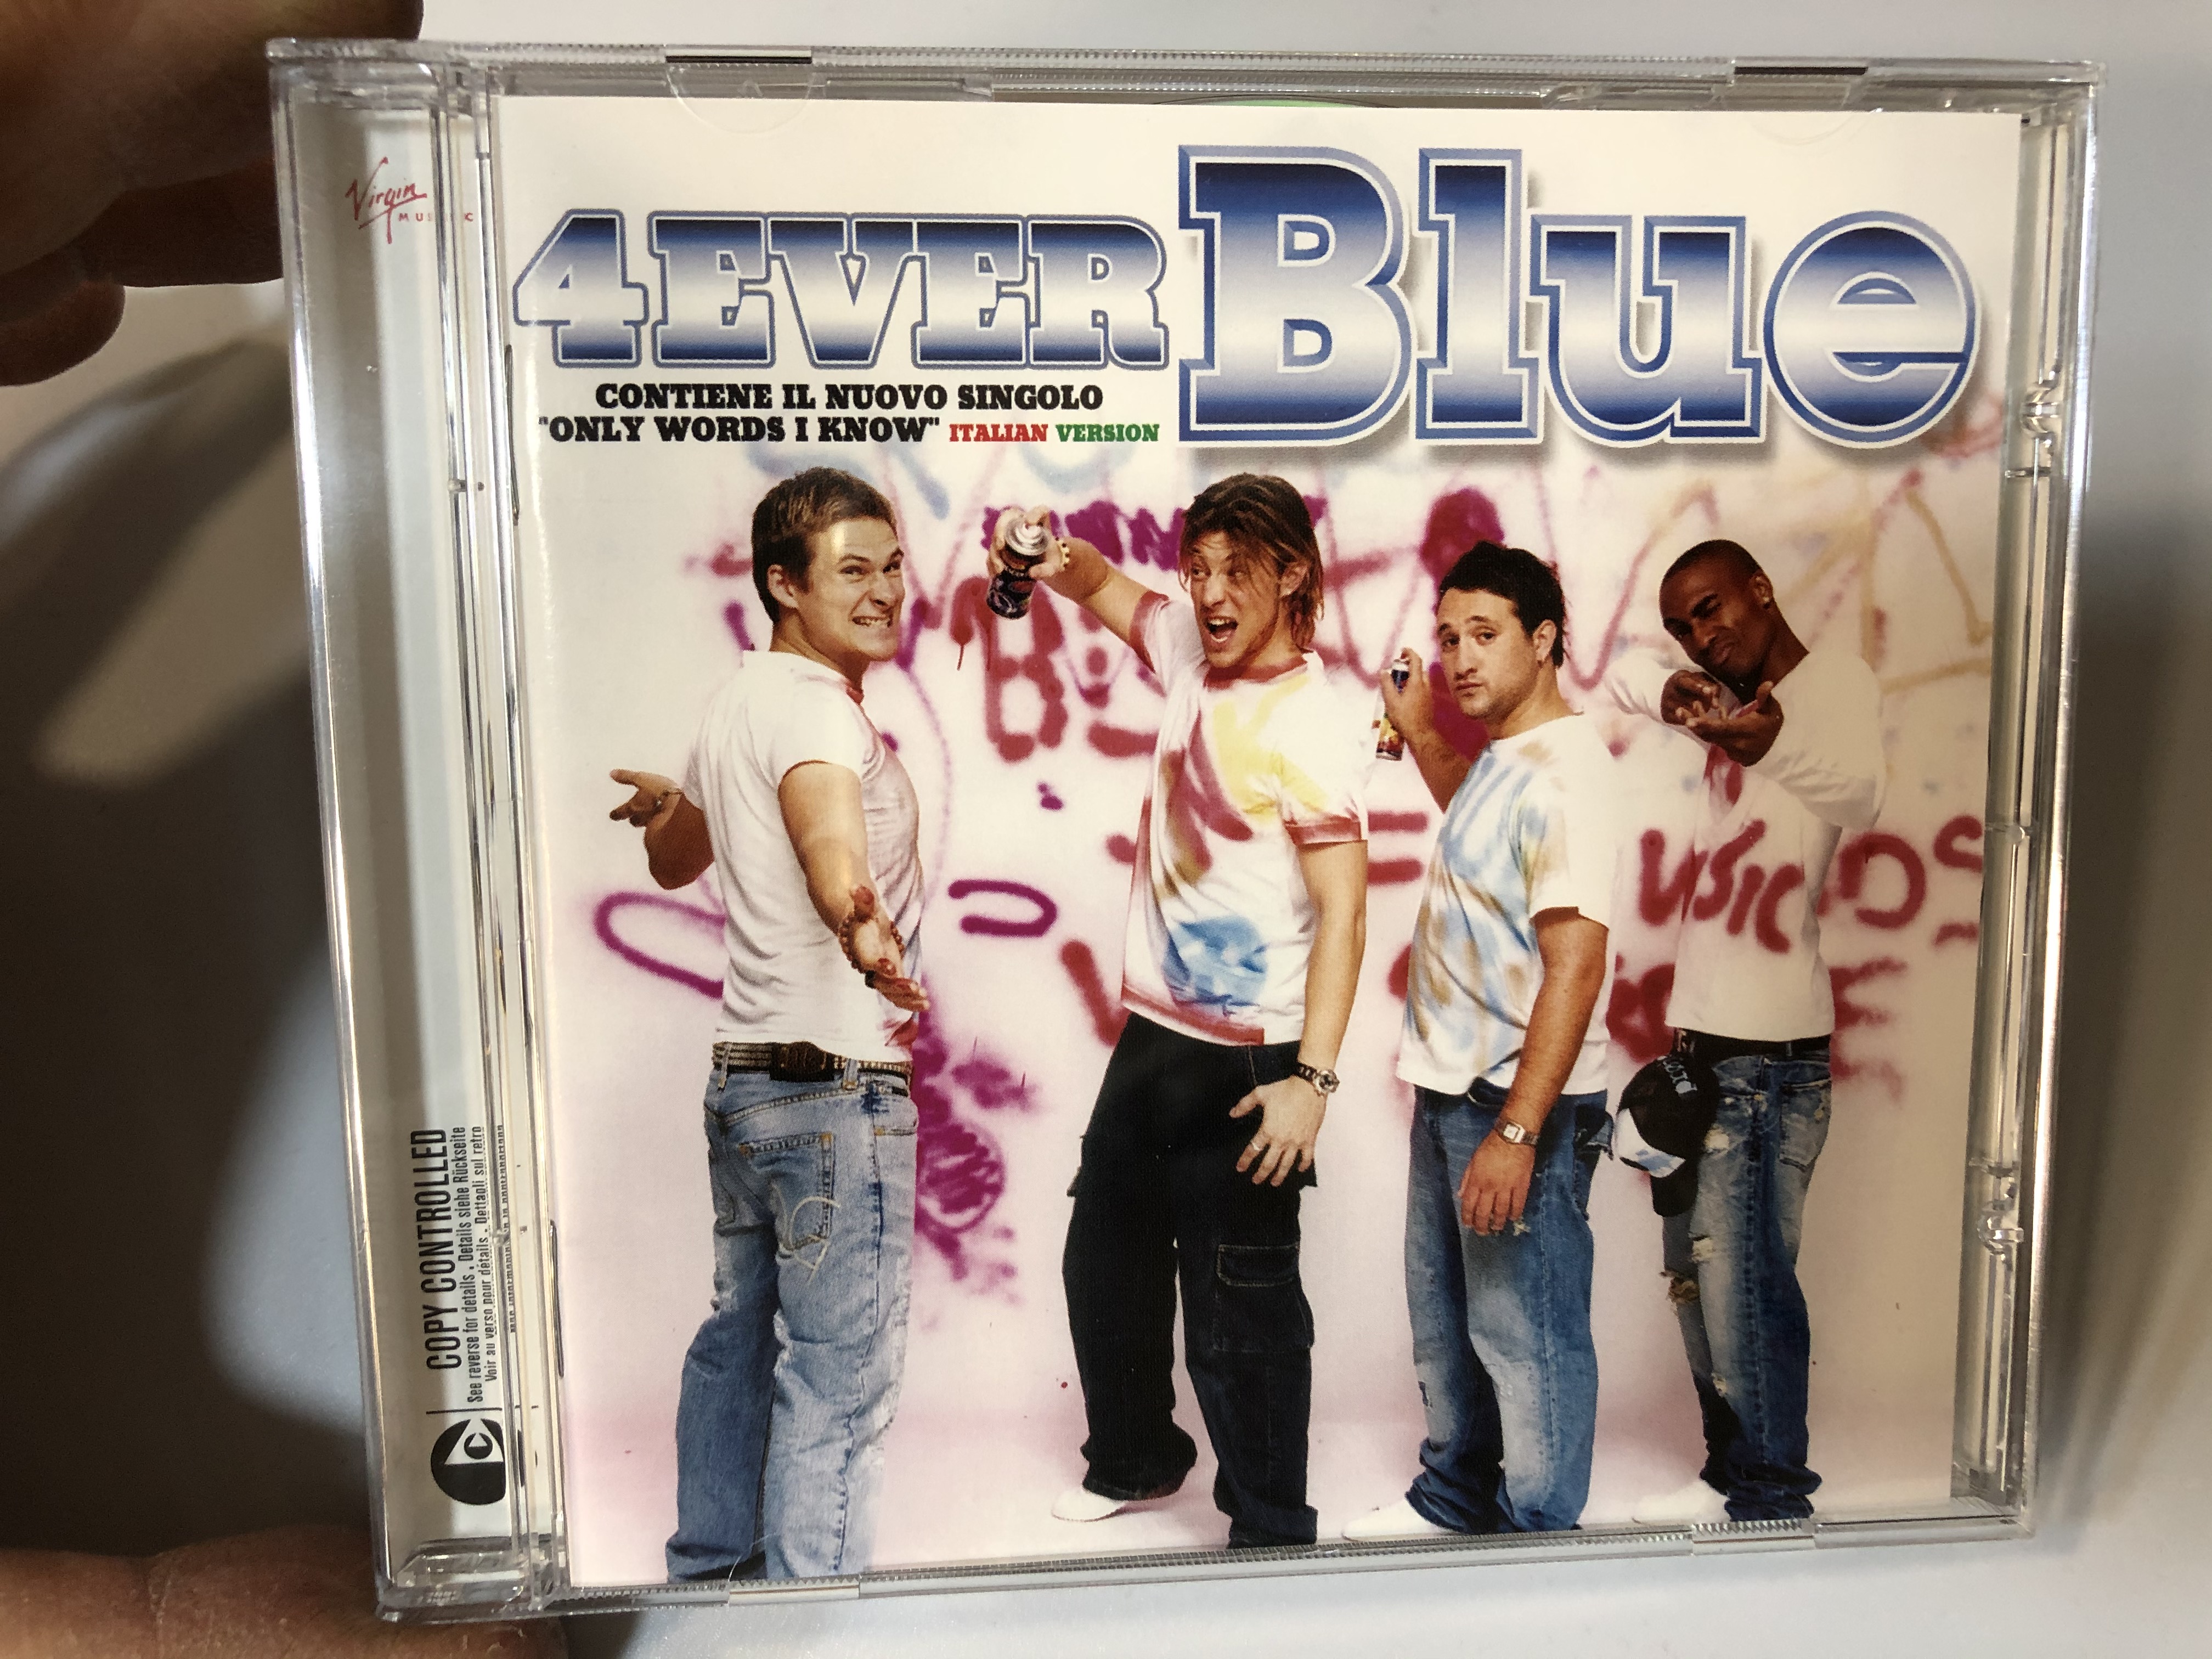 4ever-blue-contiene-il-nuovo-singolo-only-wirds-i-know-italian-version-virgin-audio-cd-2005-00946-311294-2-1-1-.jpg